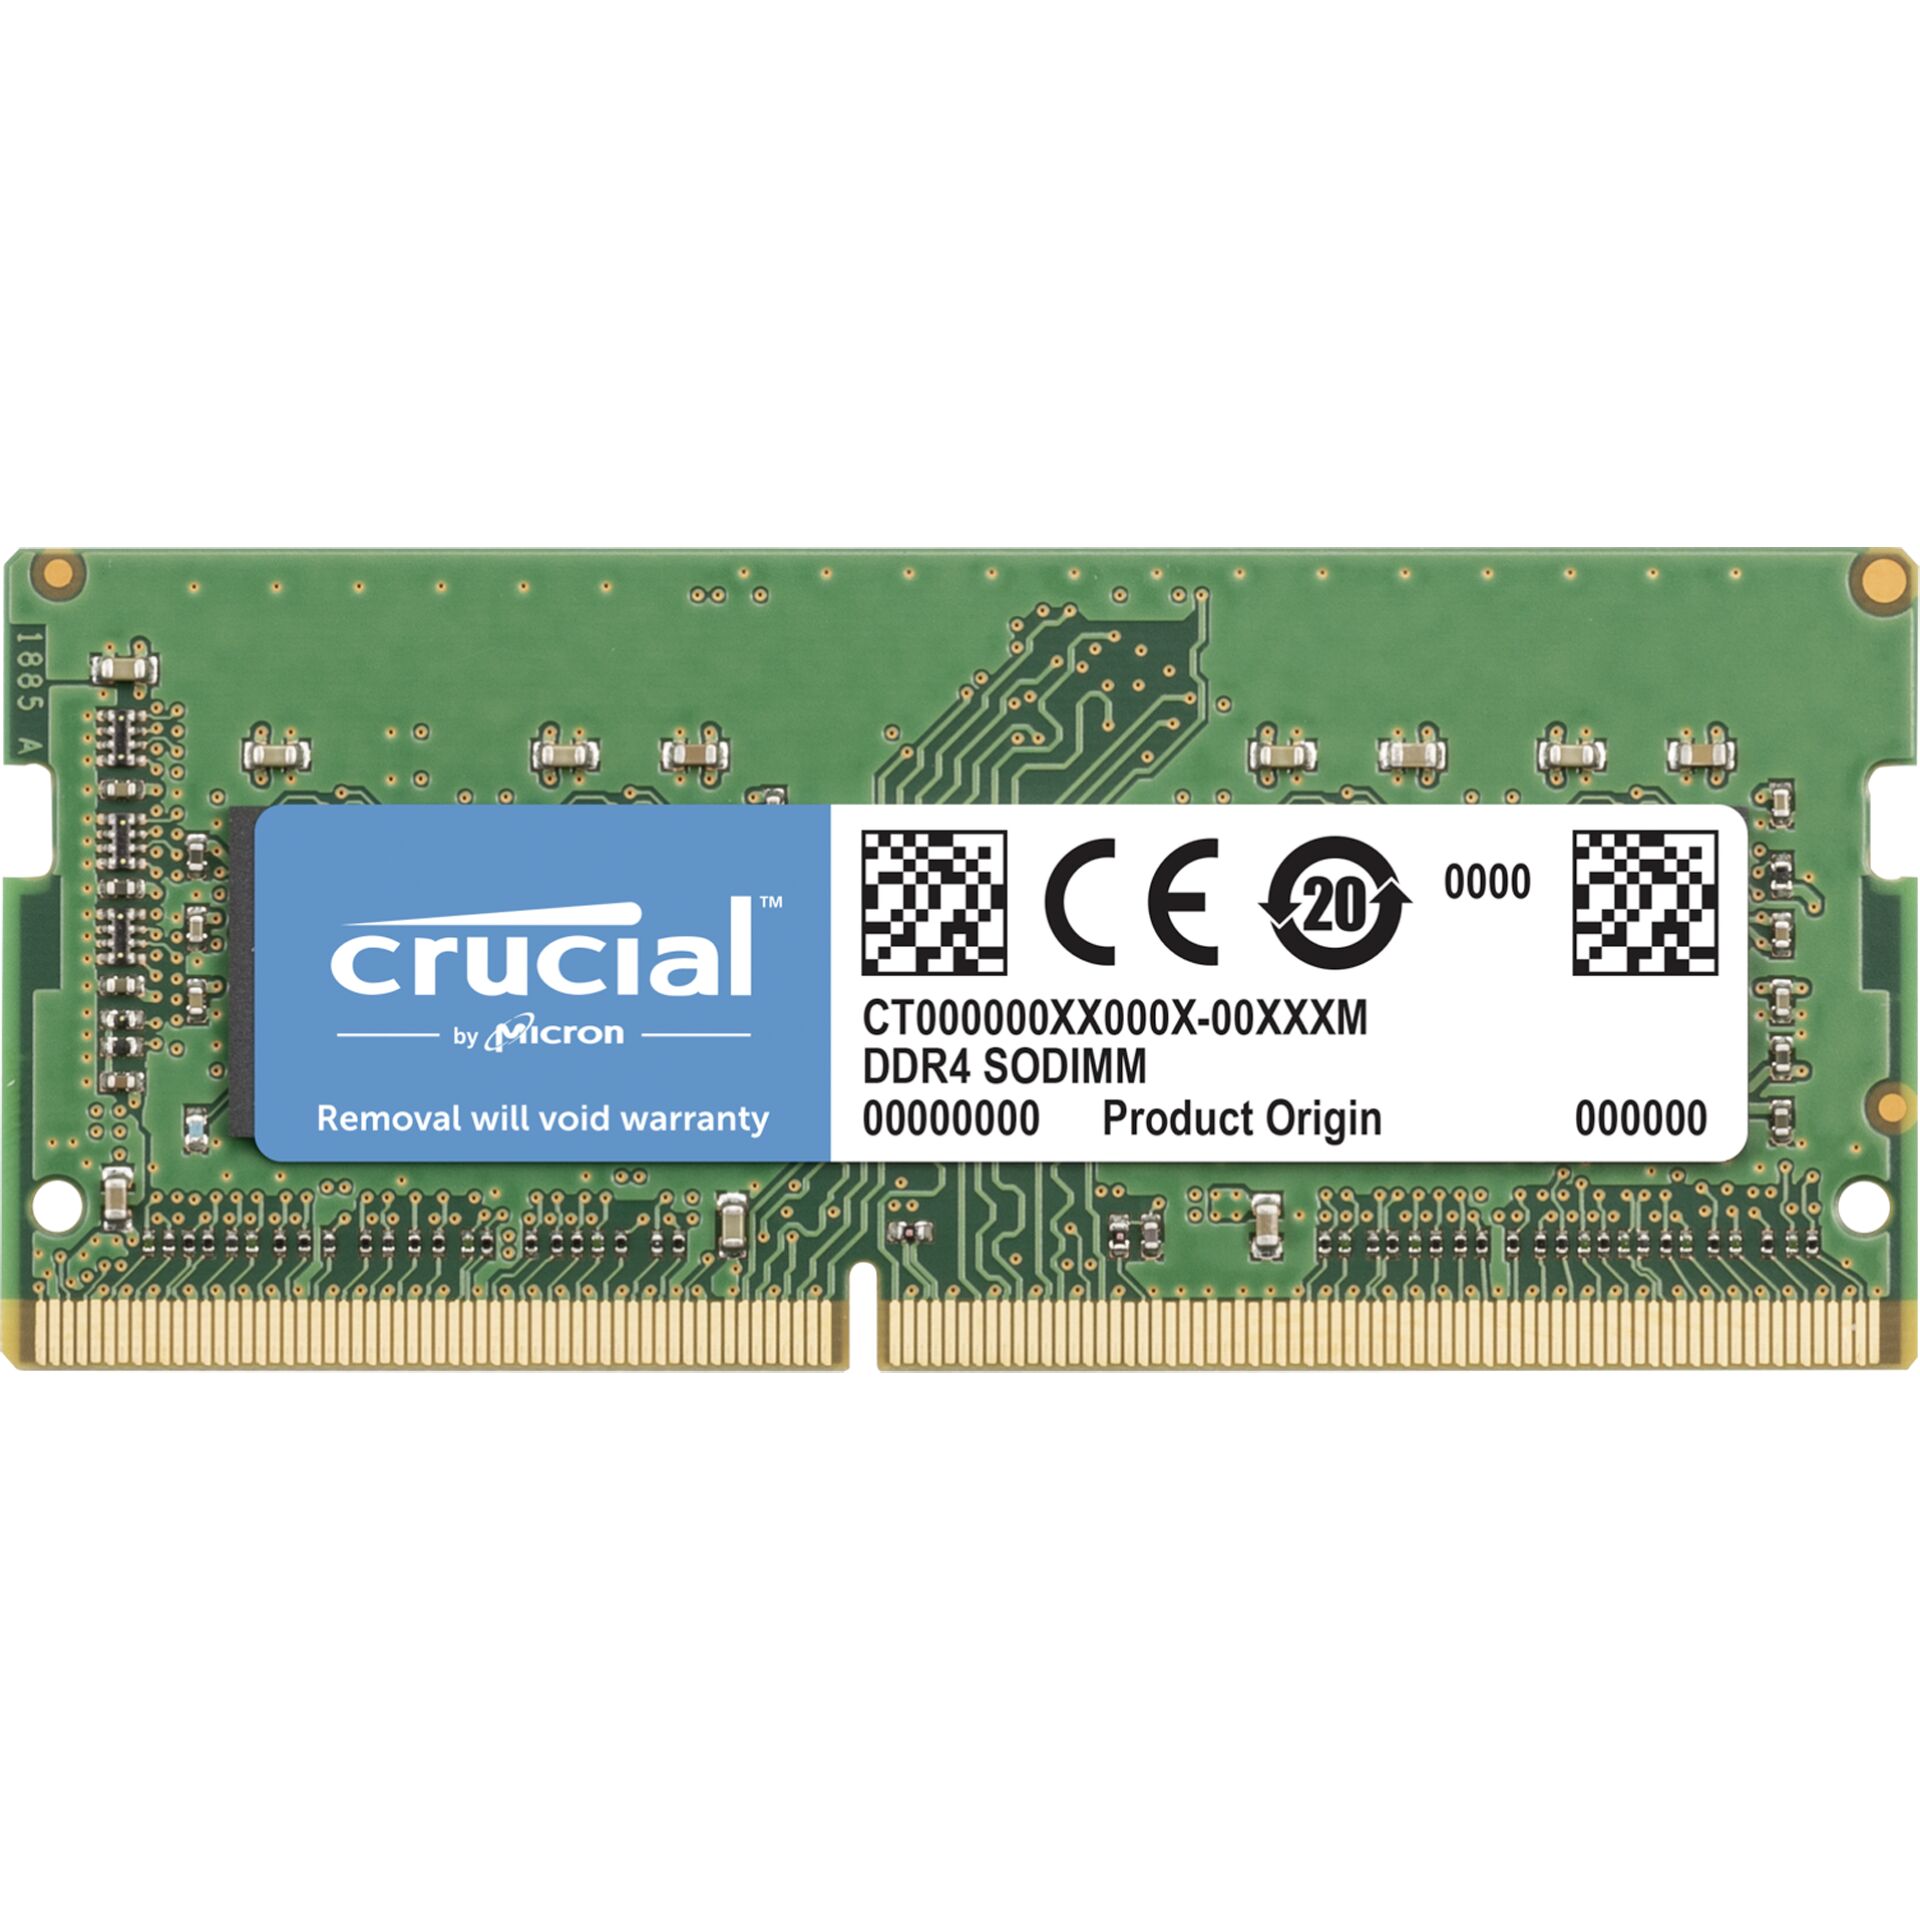 DDR4RAM 8GB DDR4-2400 Crucial Memory for Mac SO-DIMM, CL17 